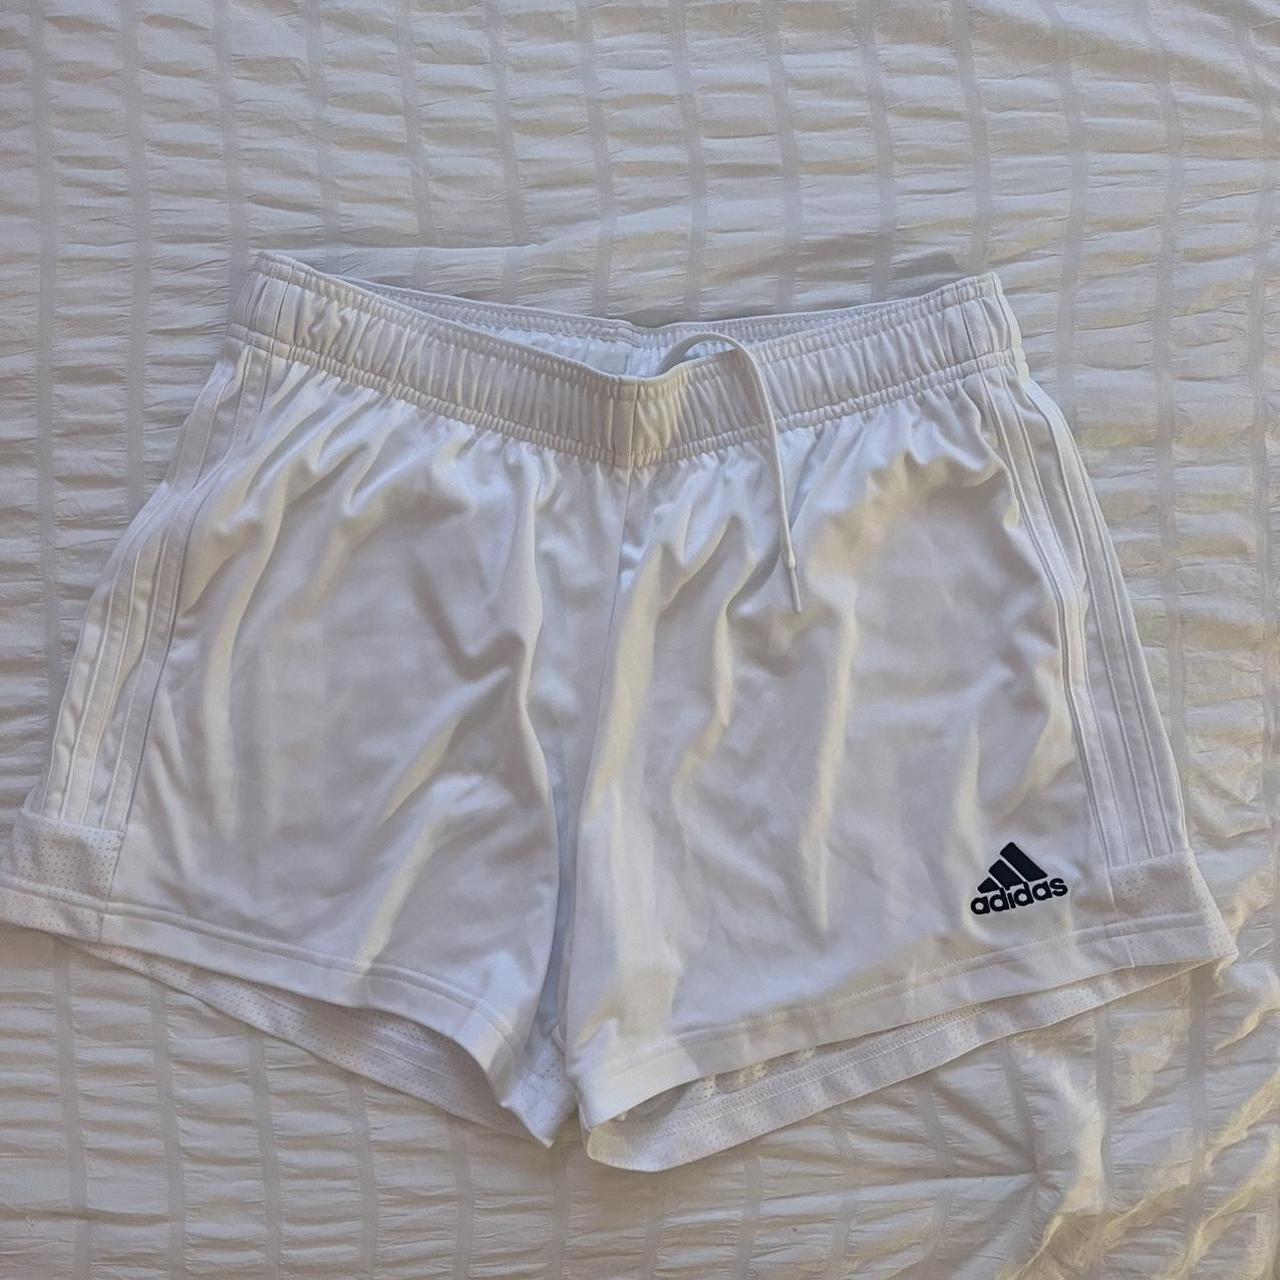 Adidas Women's White Shorts | Depop